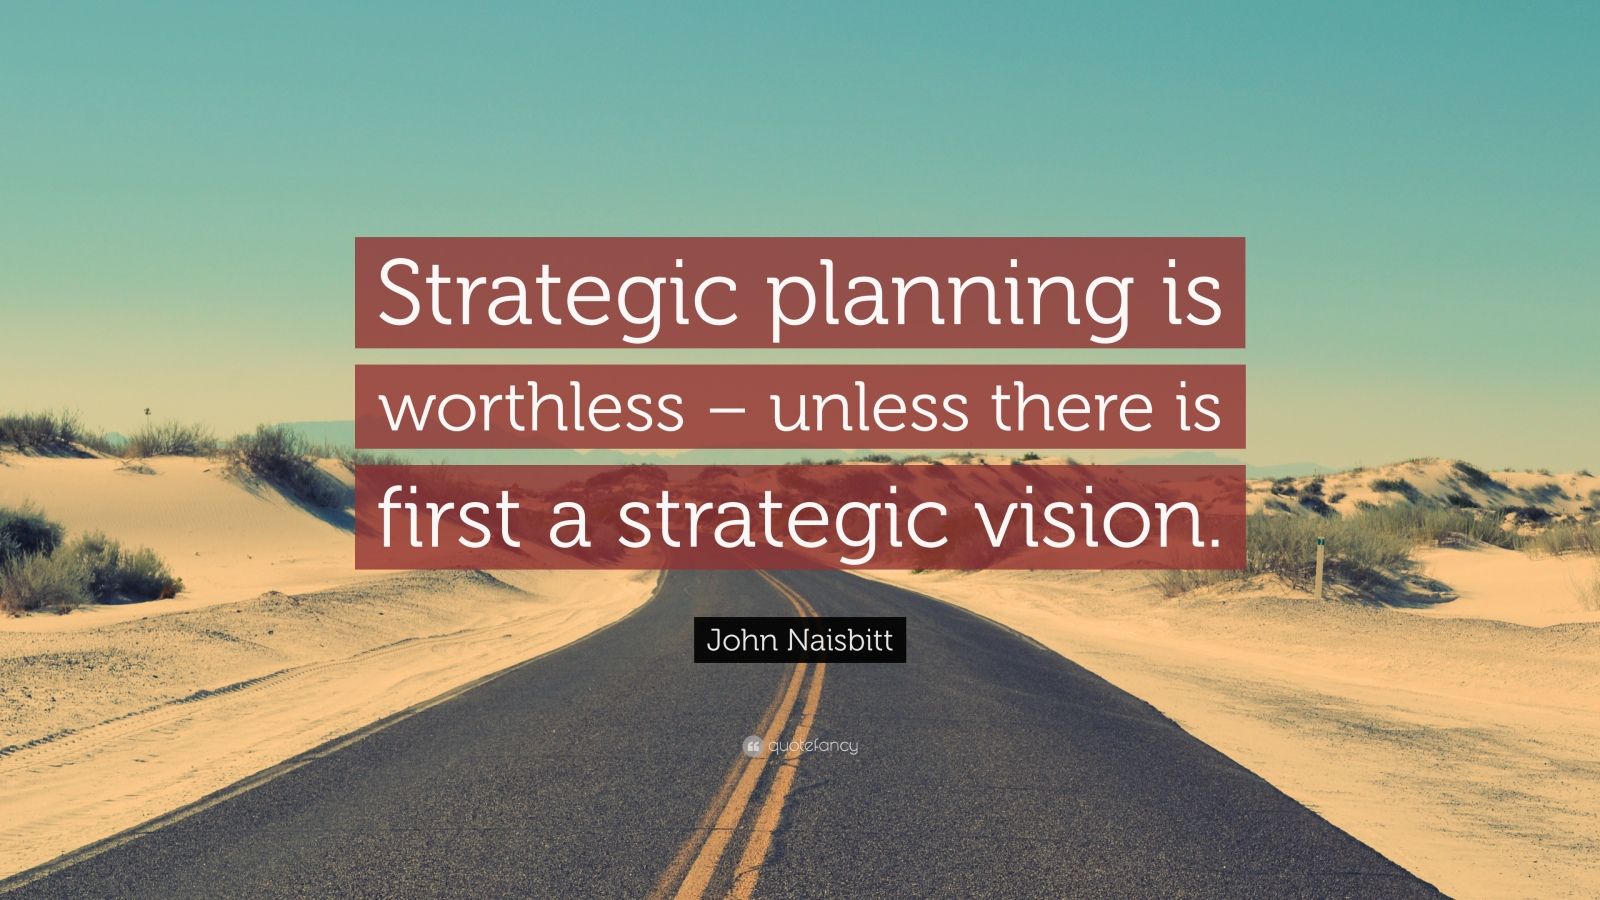 John Naisbitt Quote “Strategic planning is worthless